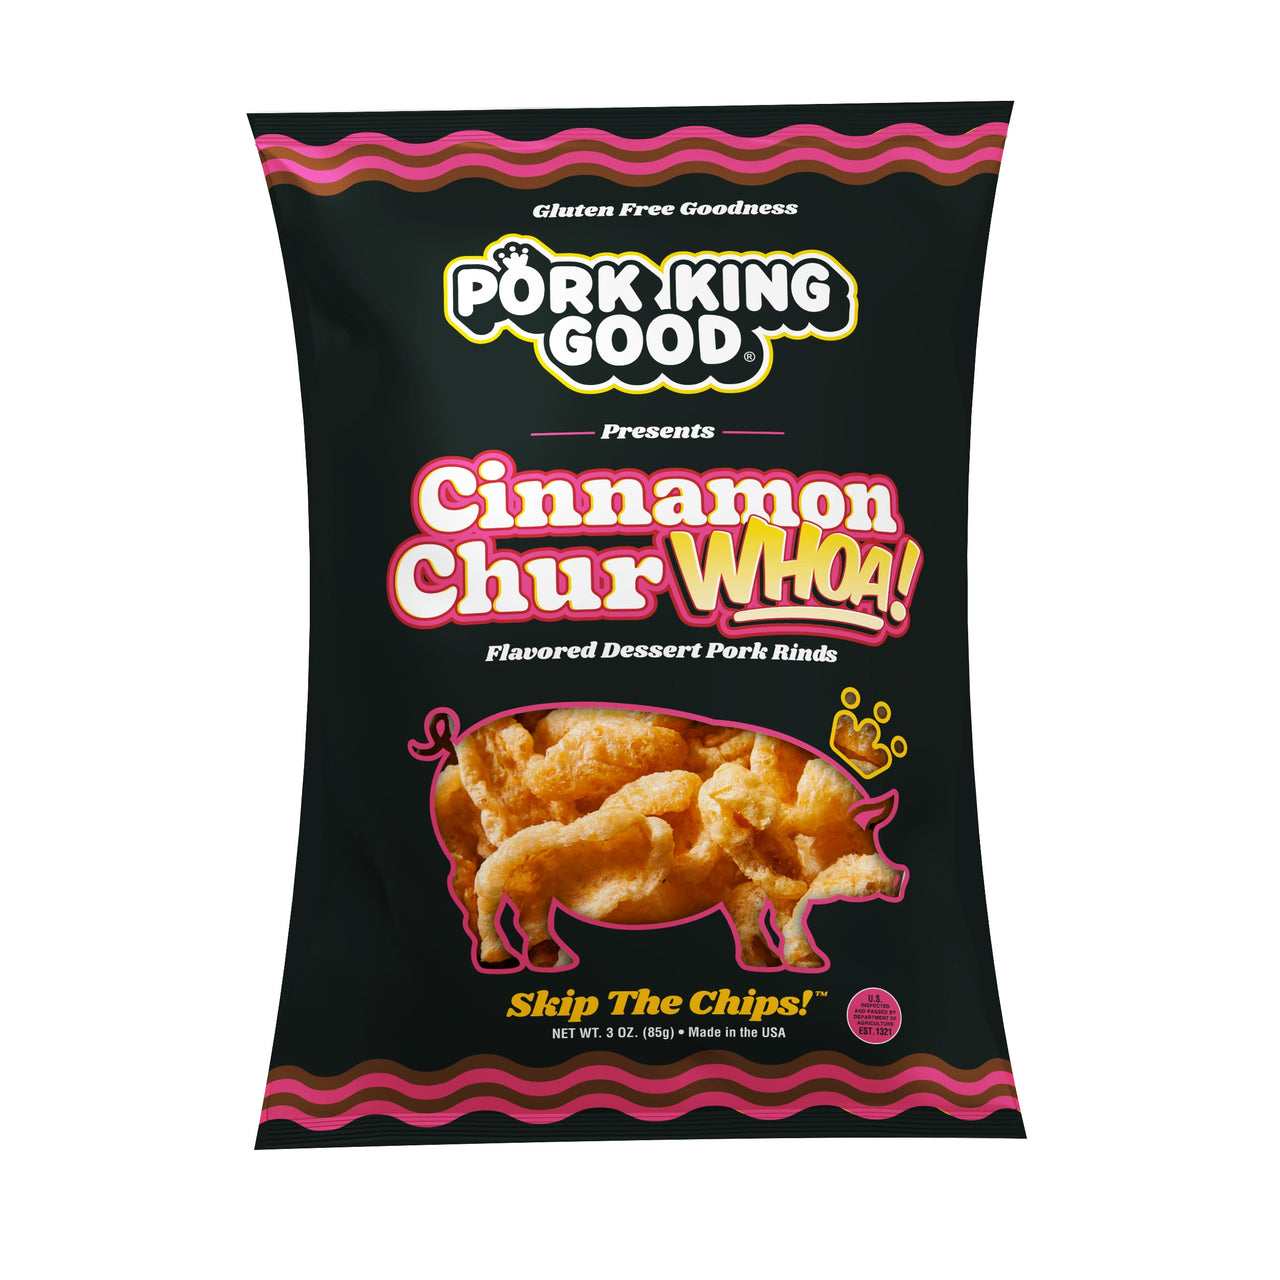 Pork King Good Cinnamon ChurWHOA Pork Rinds 3 oz - Single Bag